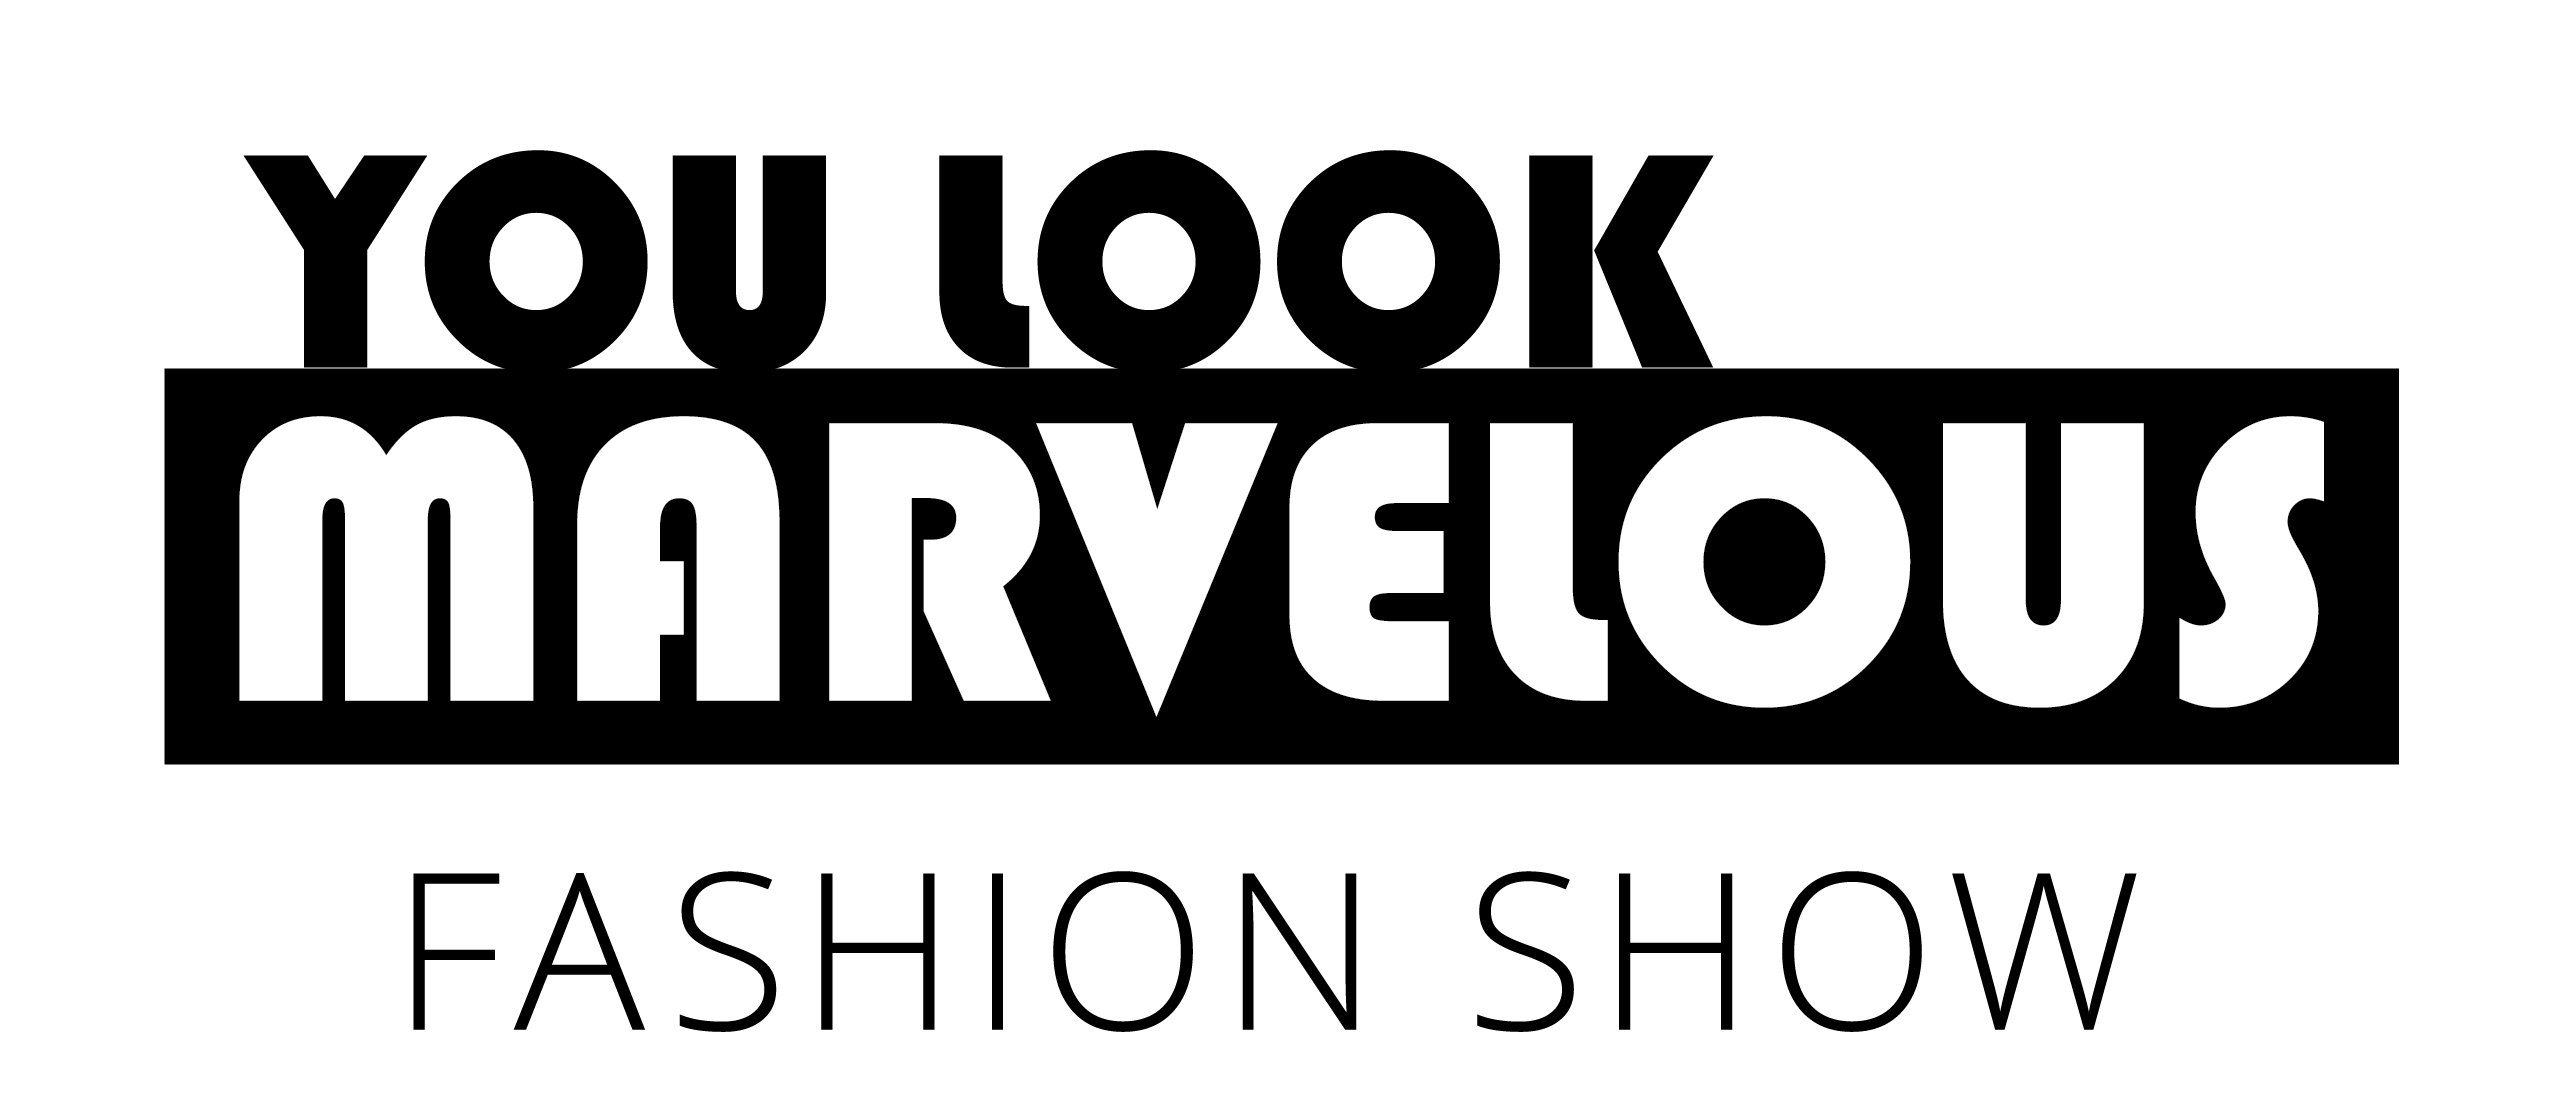 you look marvelous fashion show logo